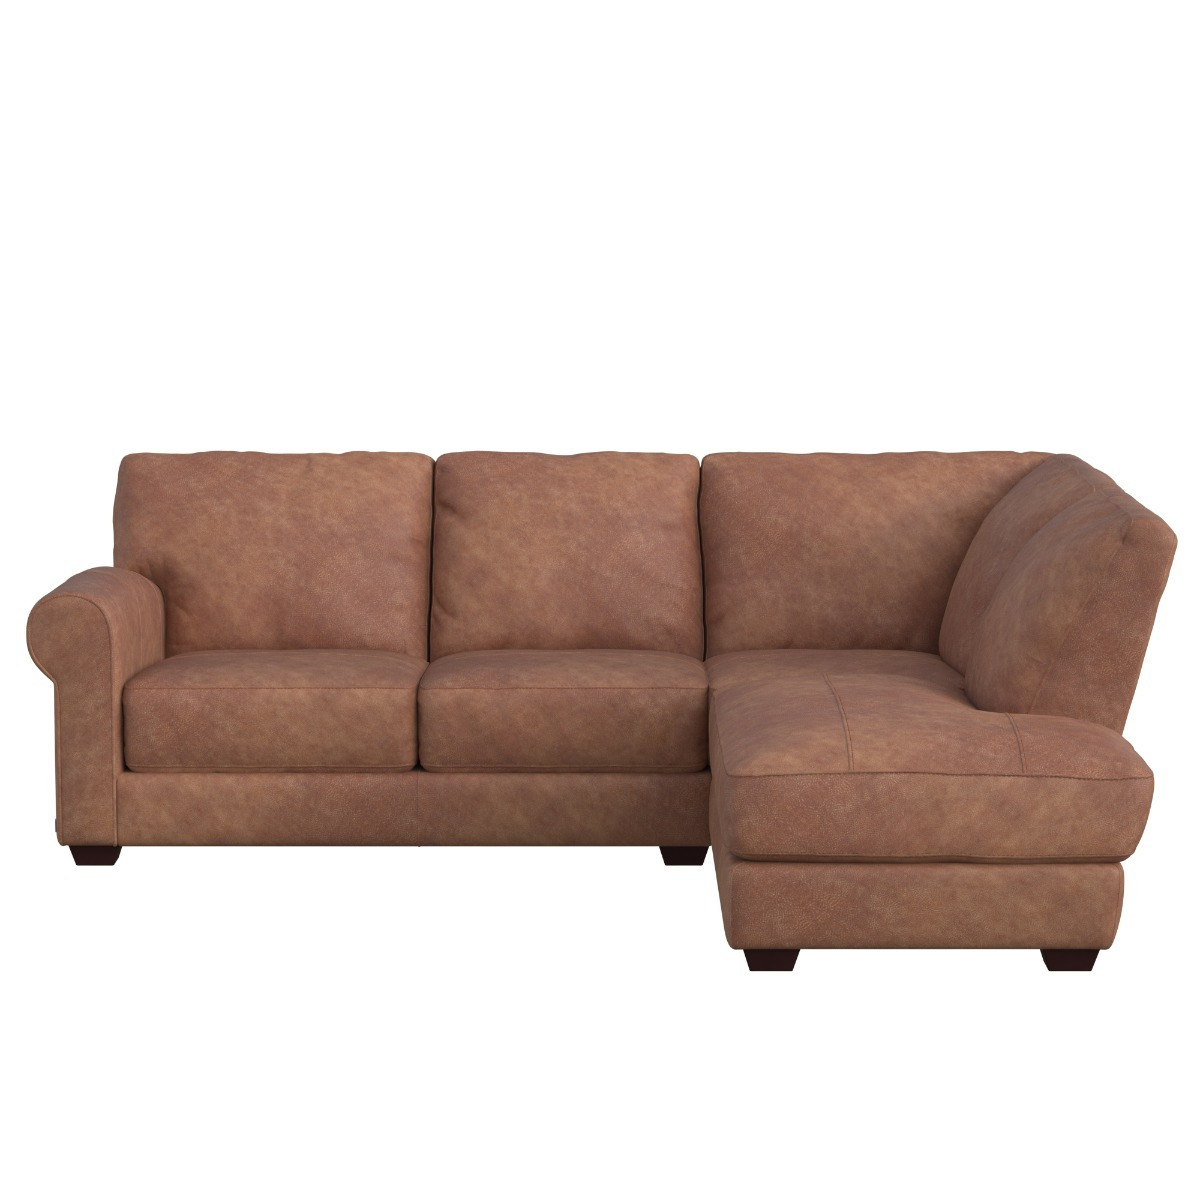 Houston Medium Corner Sofa Chaise Right, Brown Leather - Barker & Stonehouse - image 1